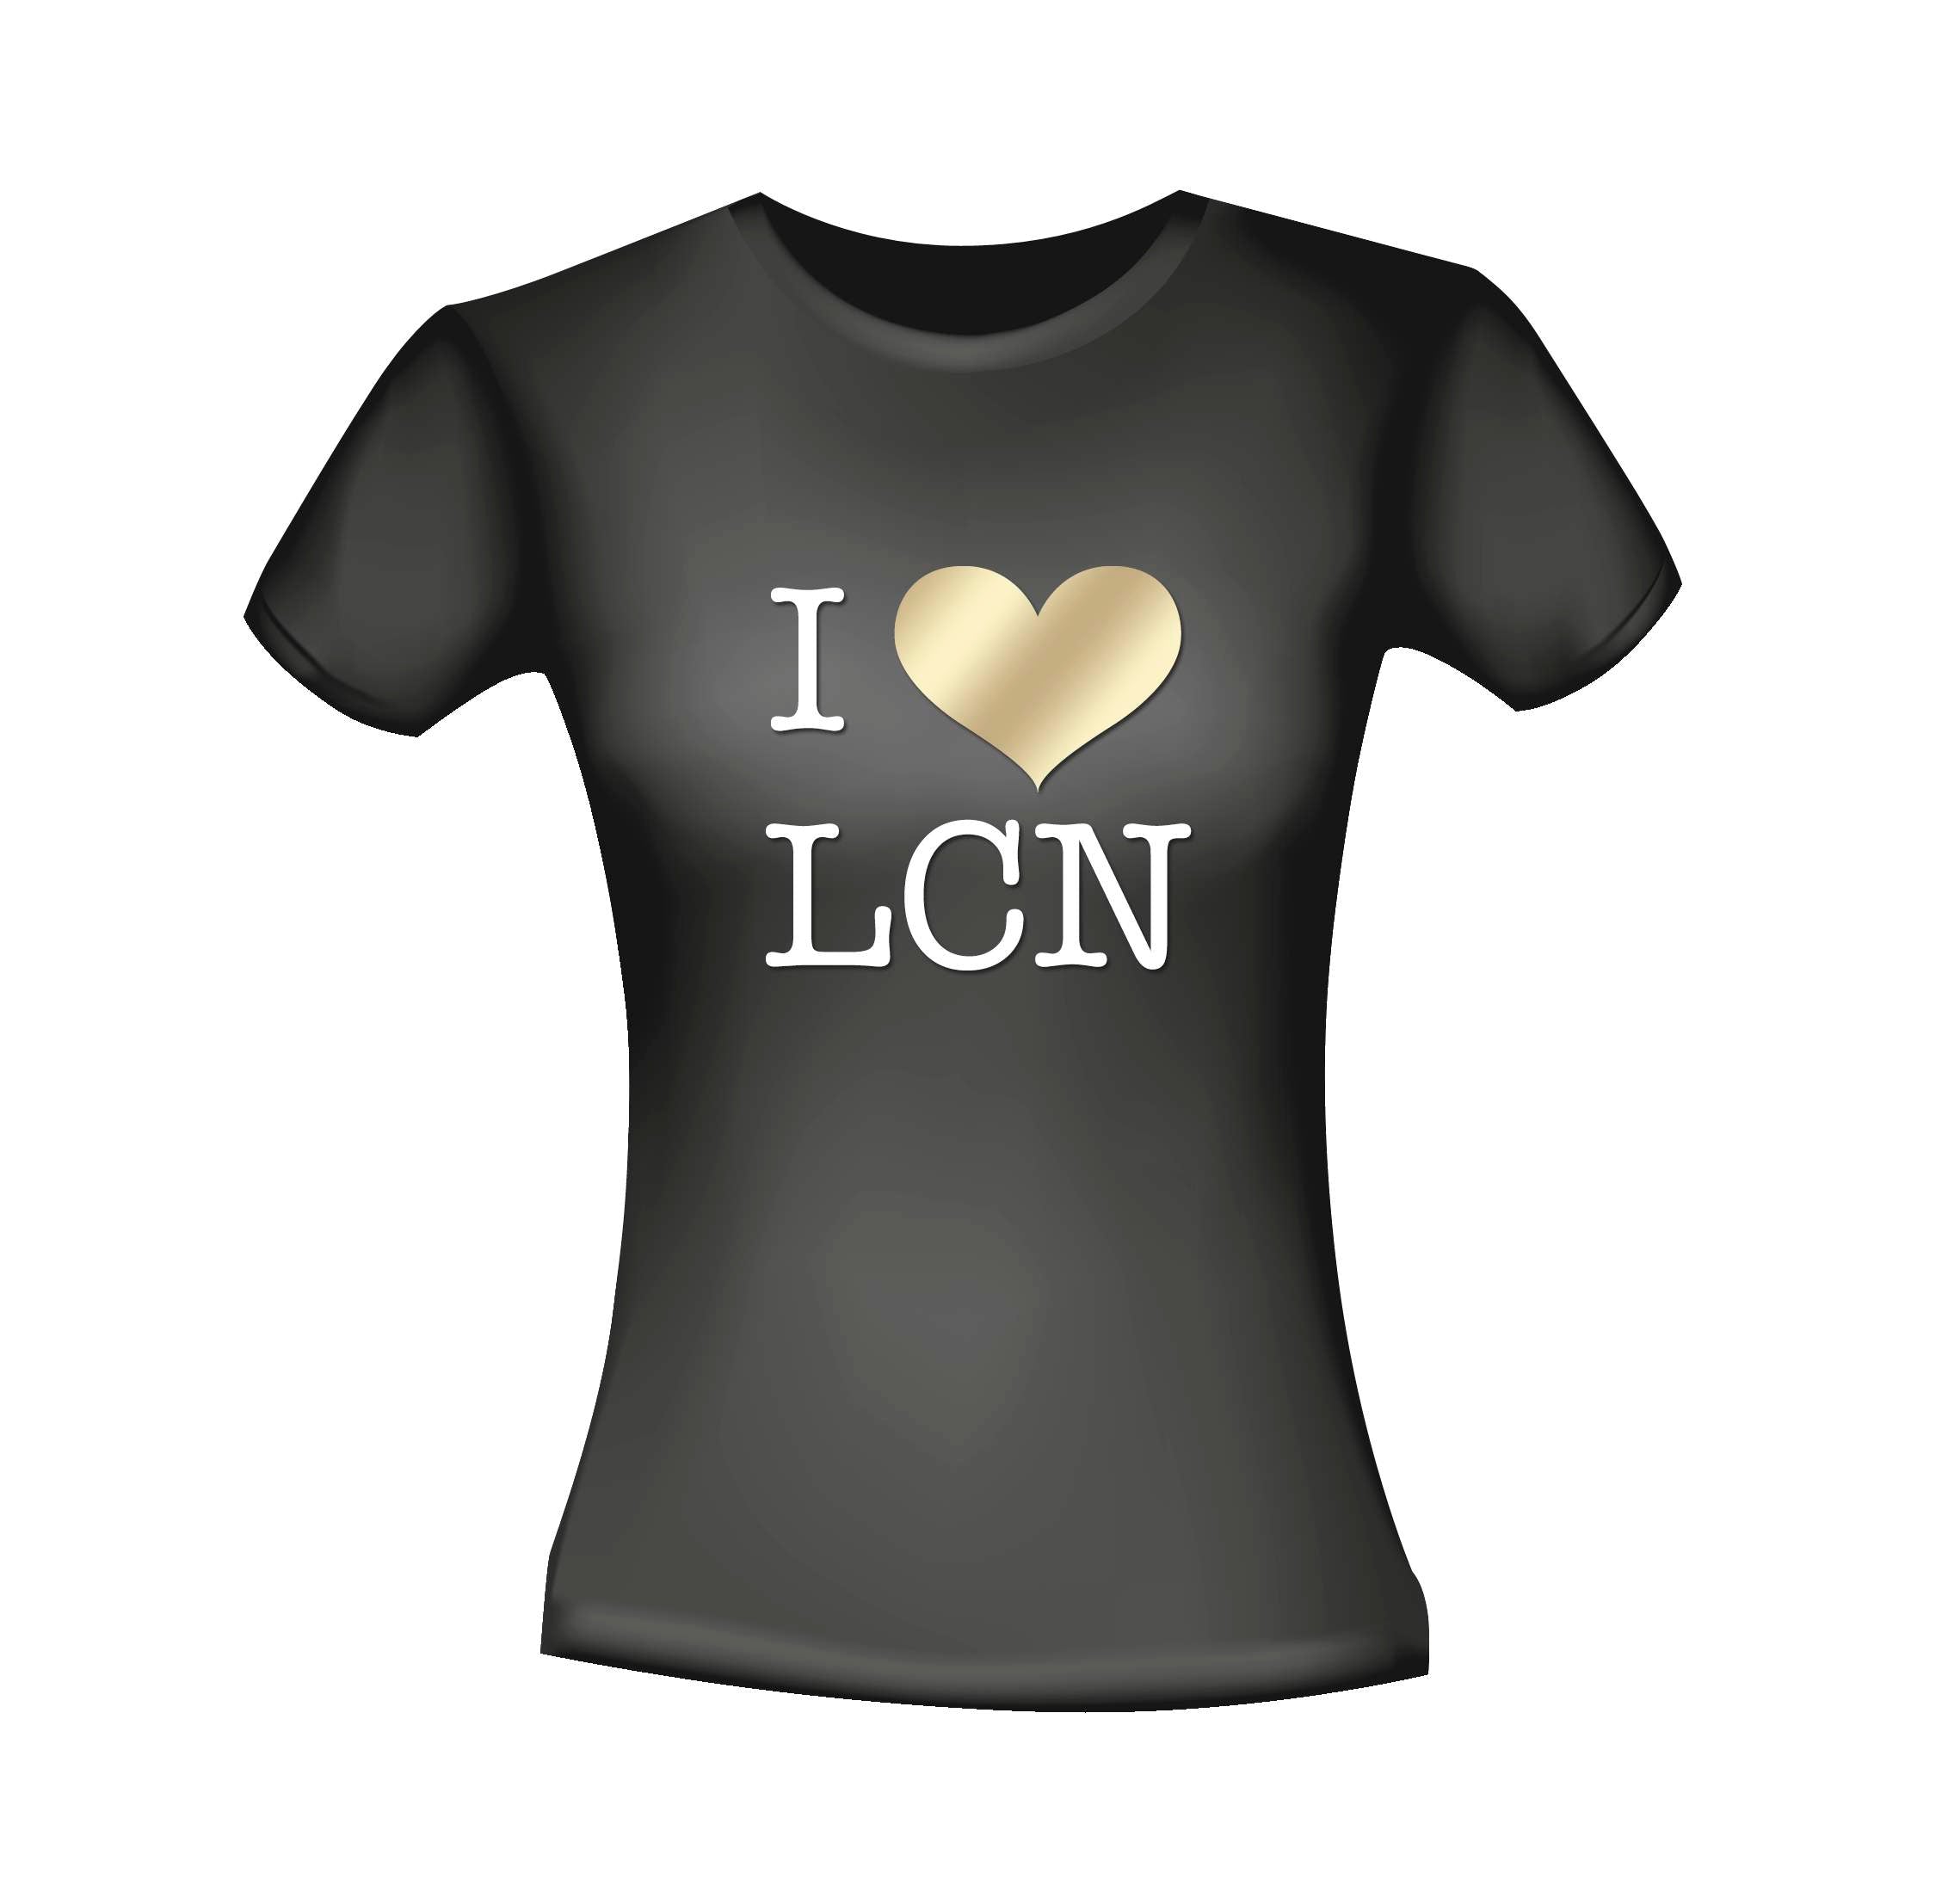 I love LCN black T-Shirt  XXXL